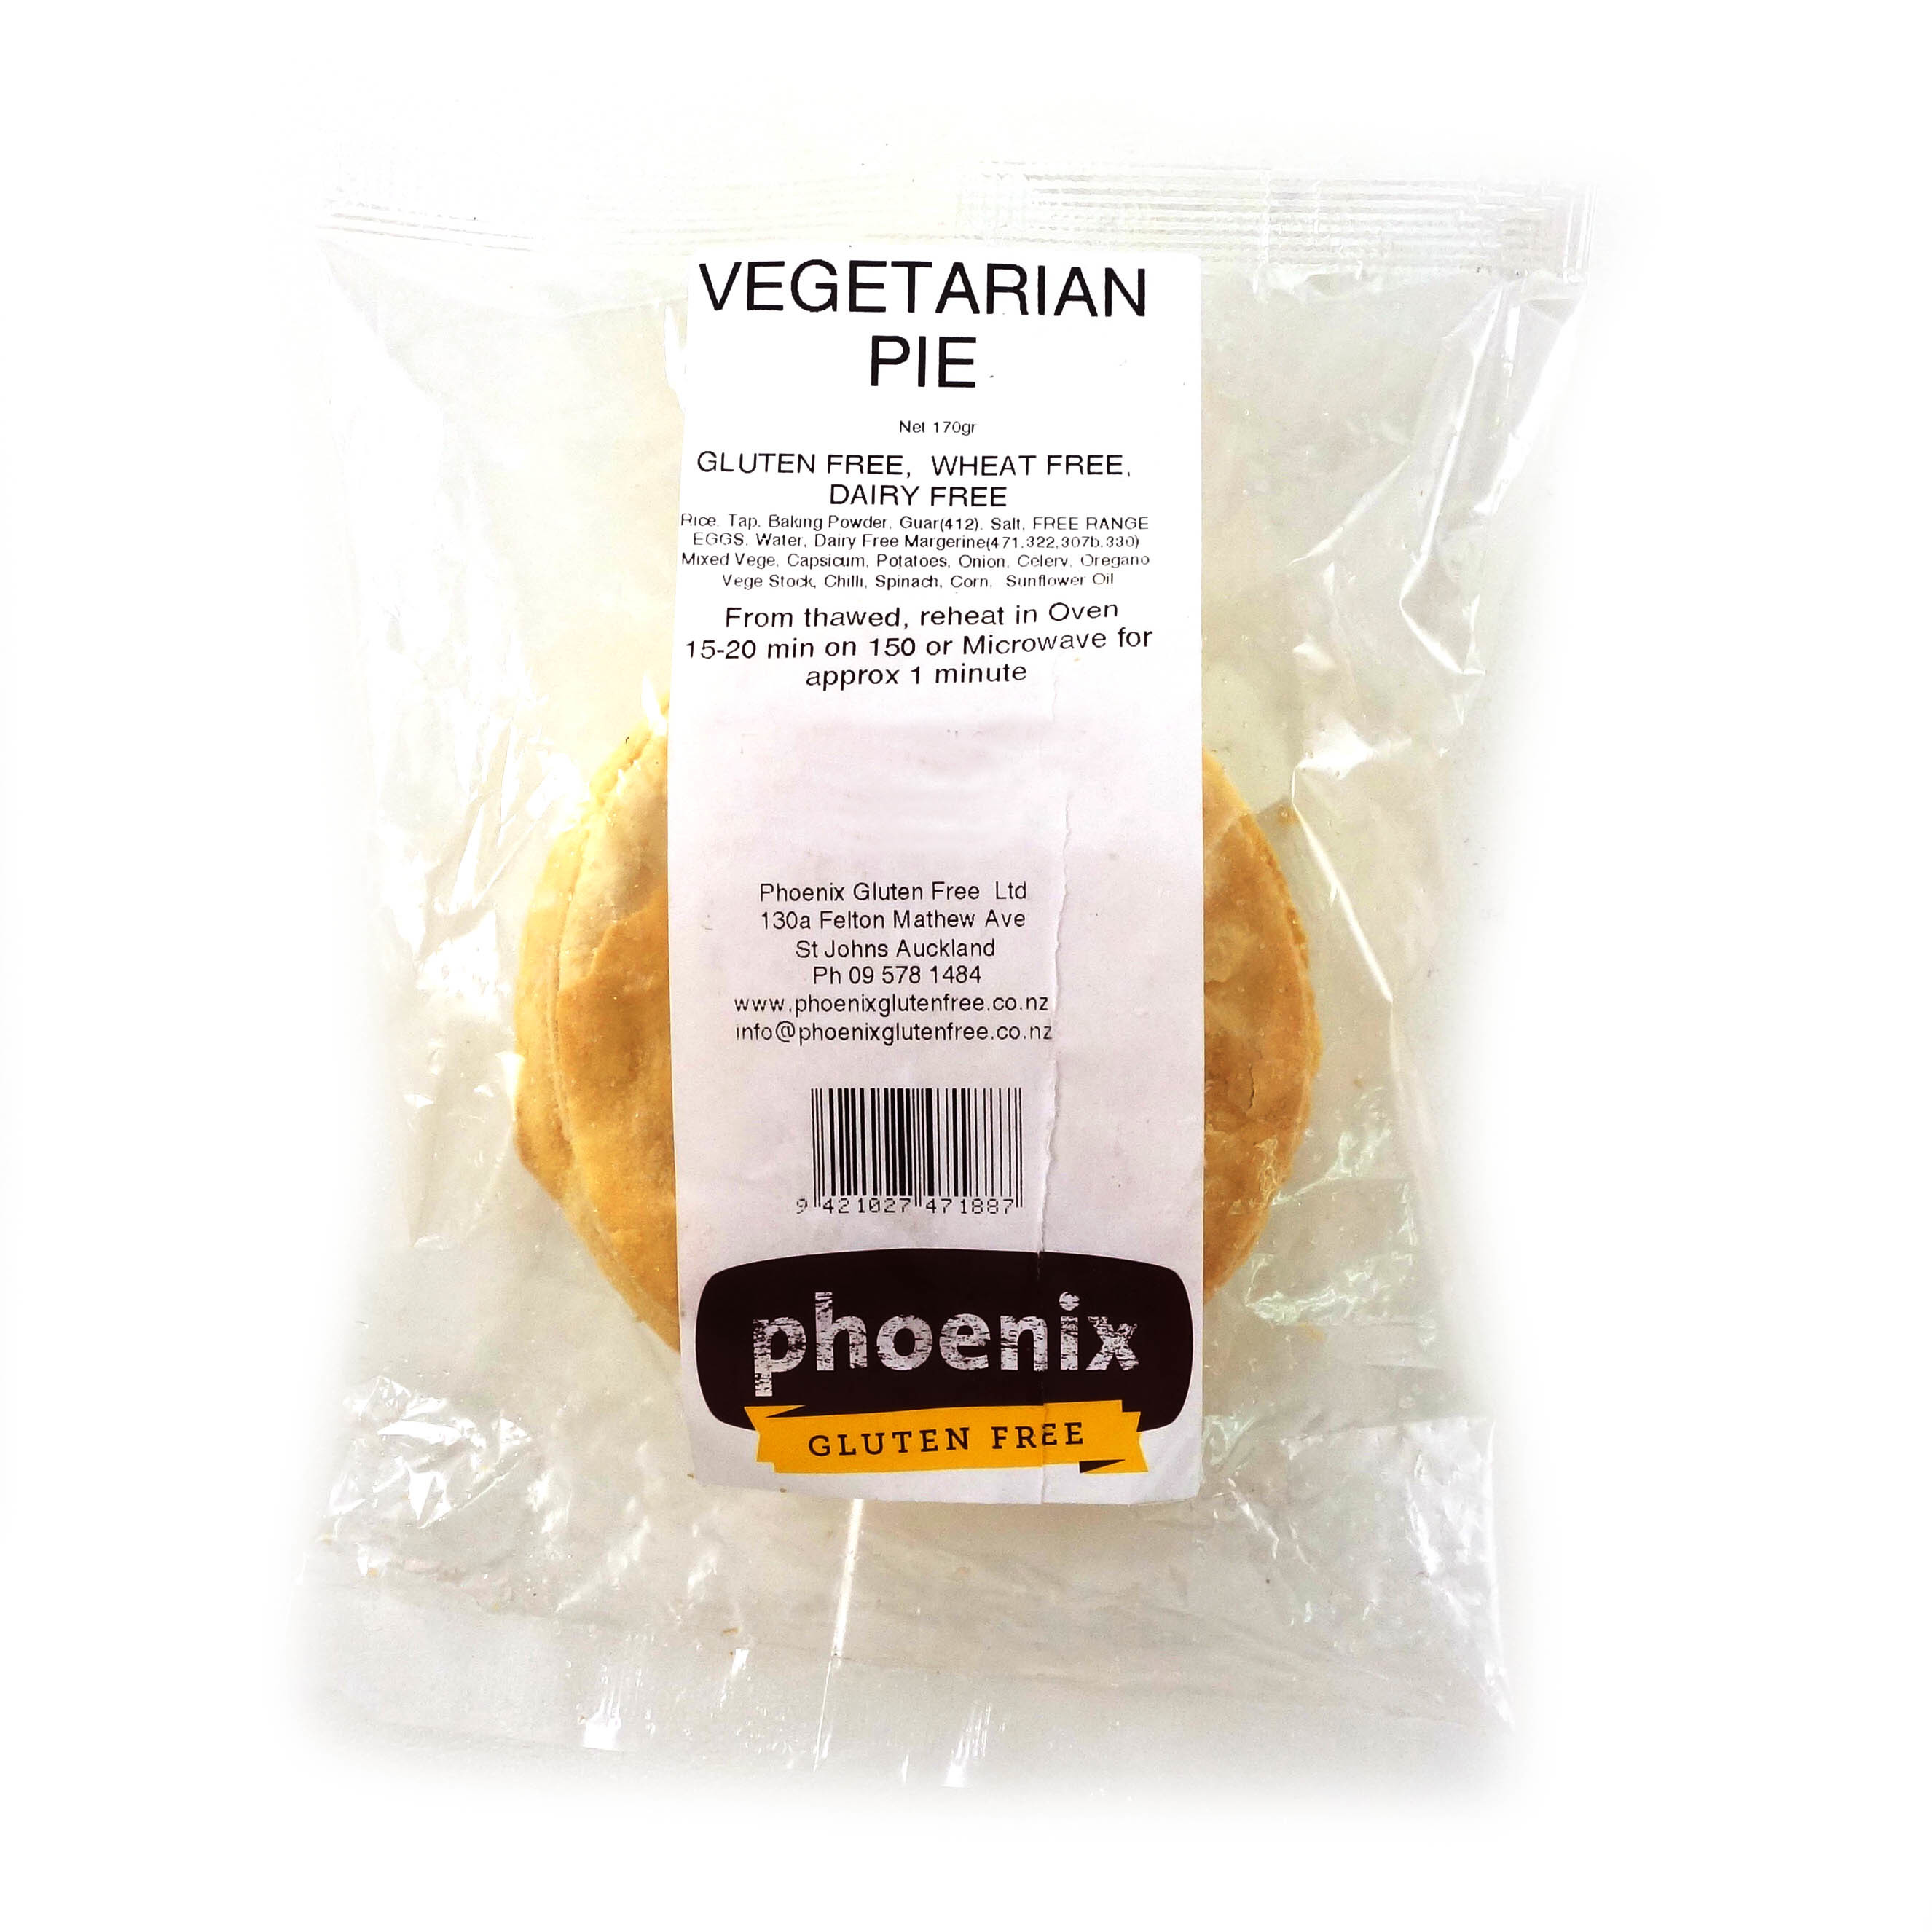 Frozen Phoenix GF Vegetarian Pie 170g - NZ* 